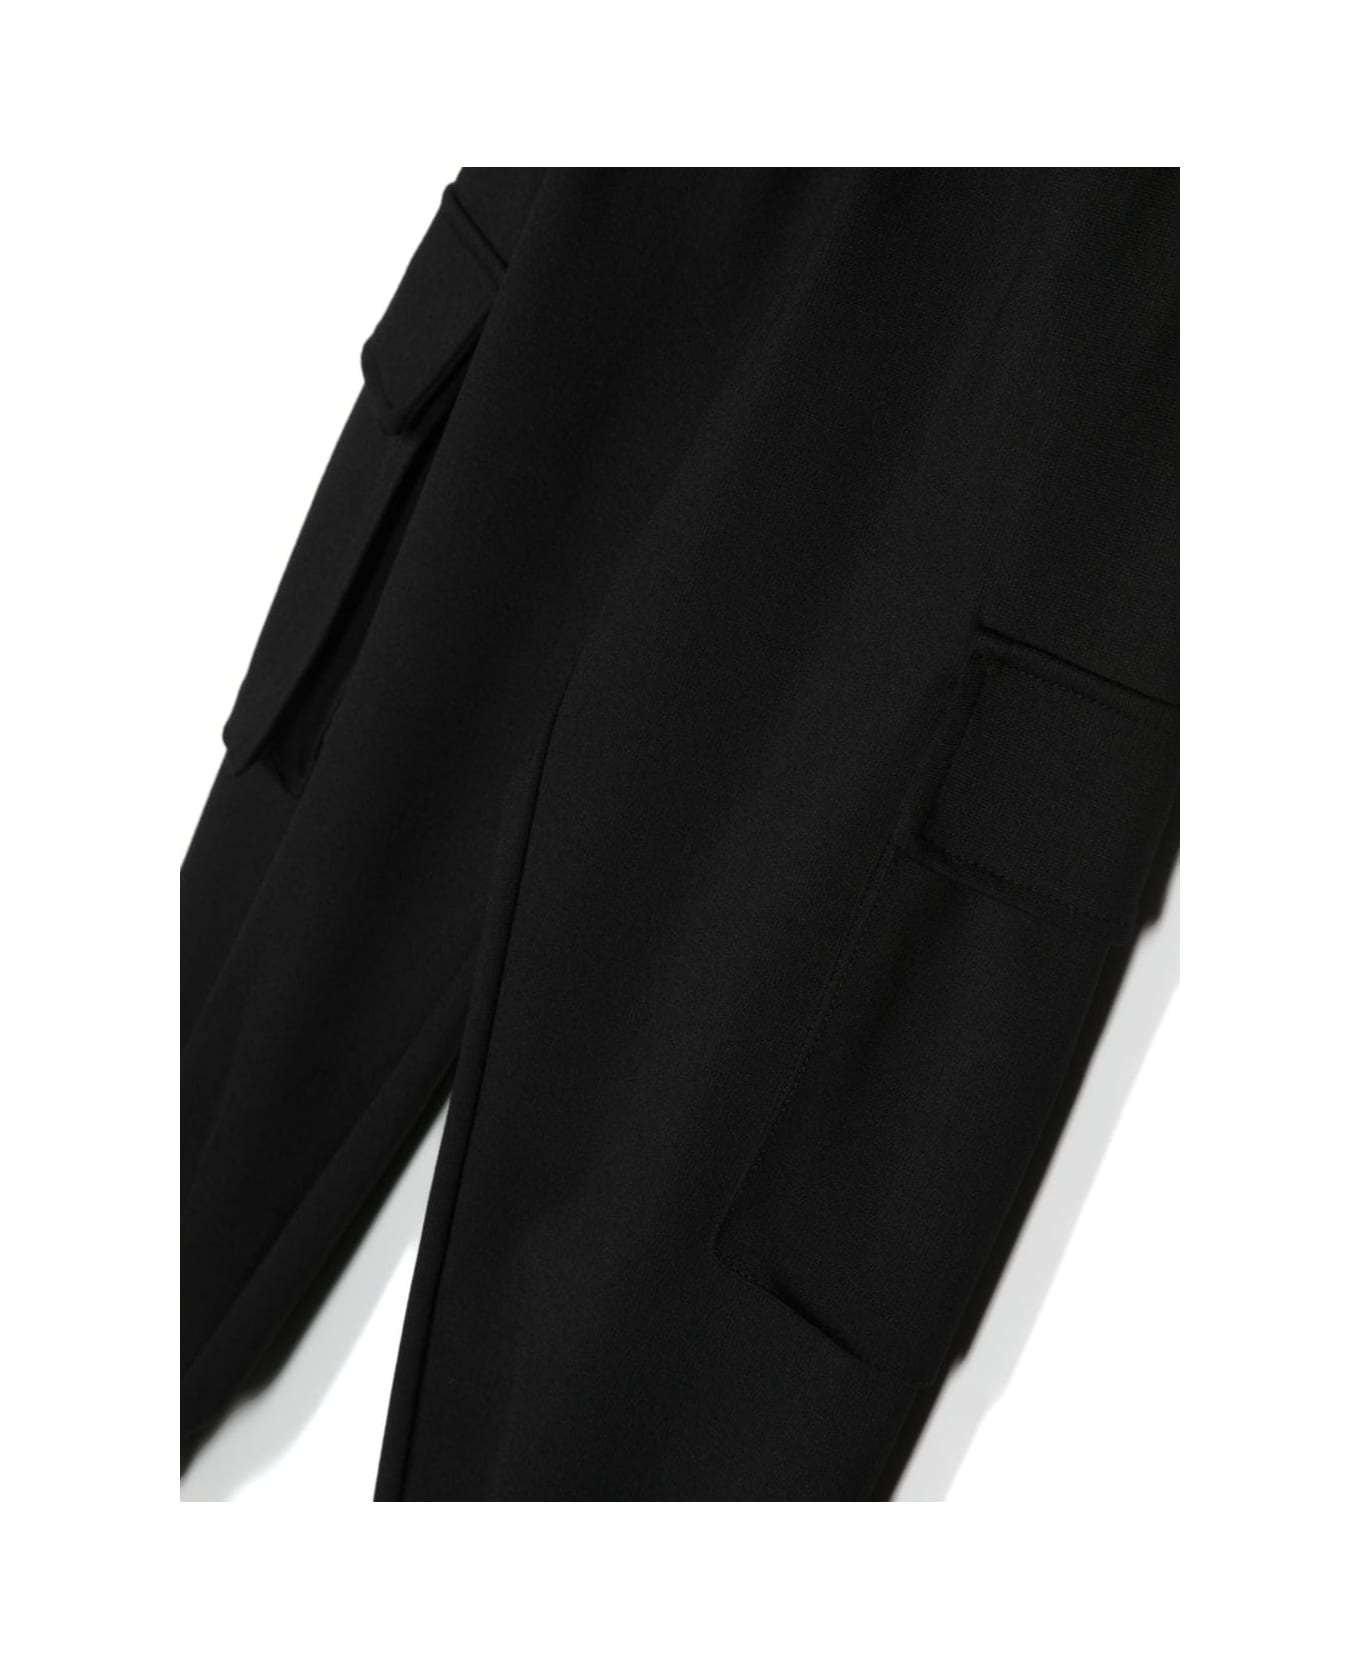 Balmain Sport Trousers - Black